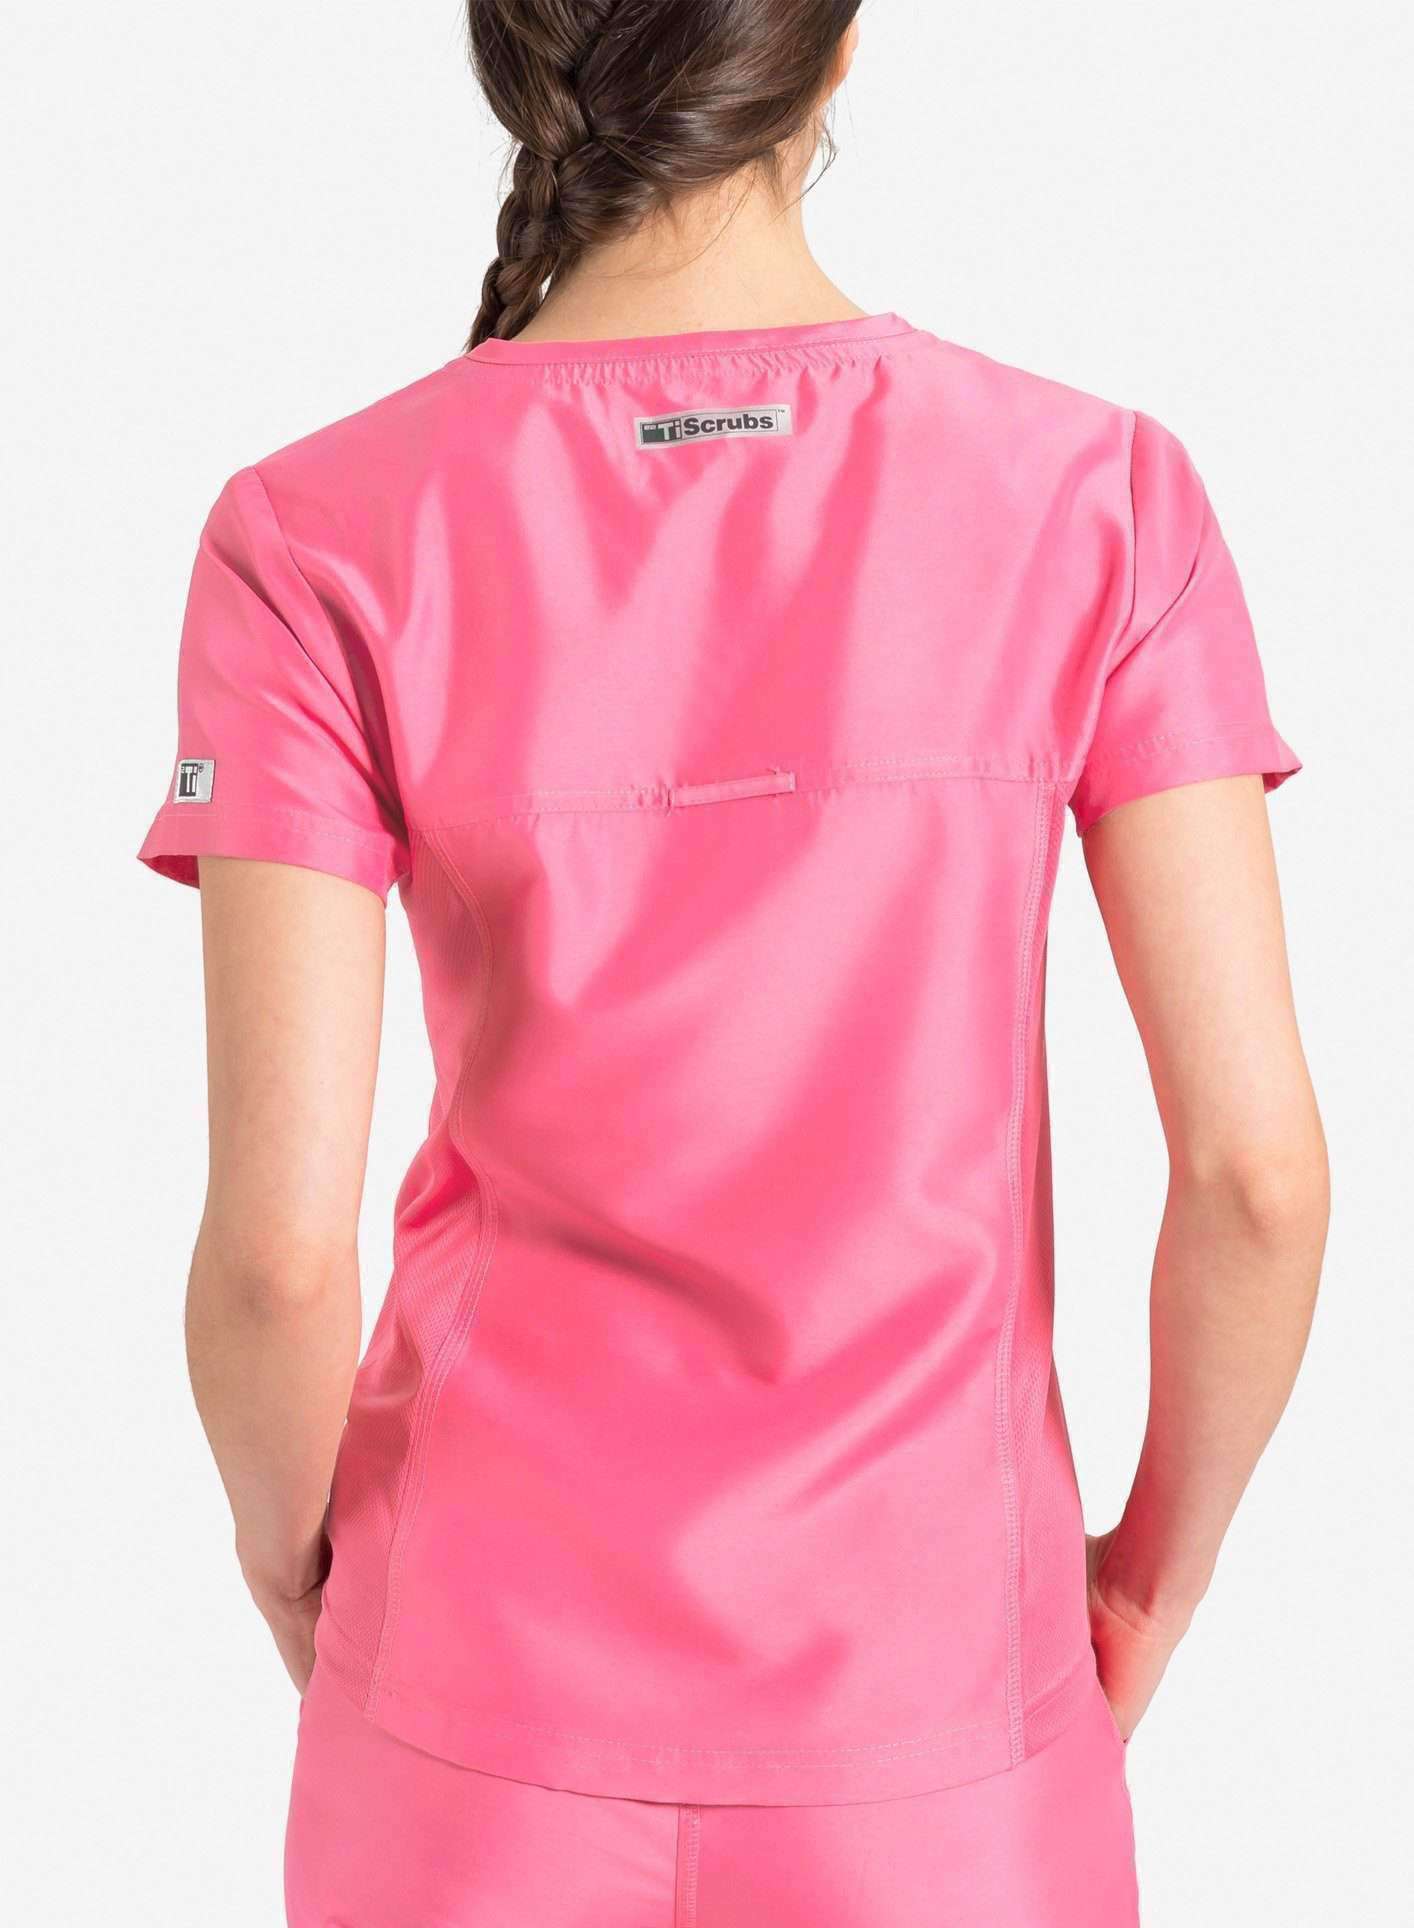 womens Elements short sleeve hidden pocket scrub top pink